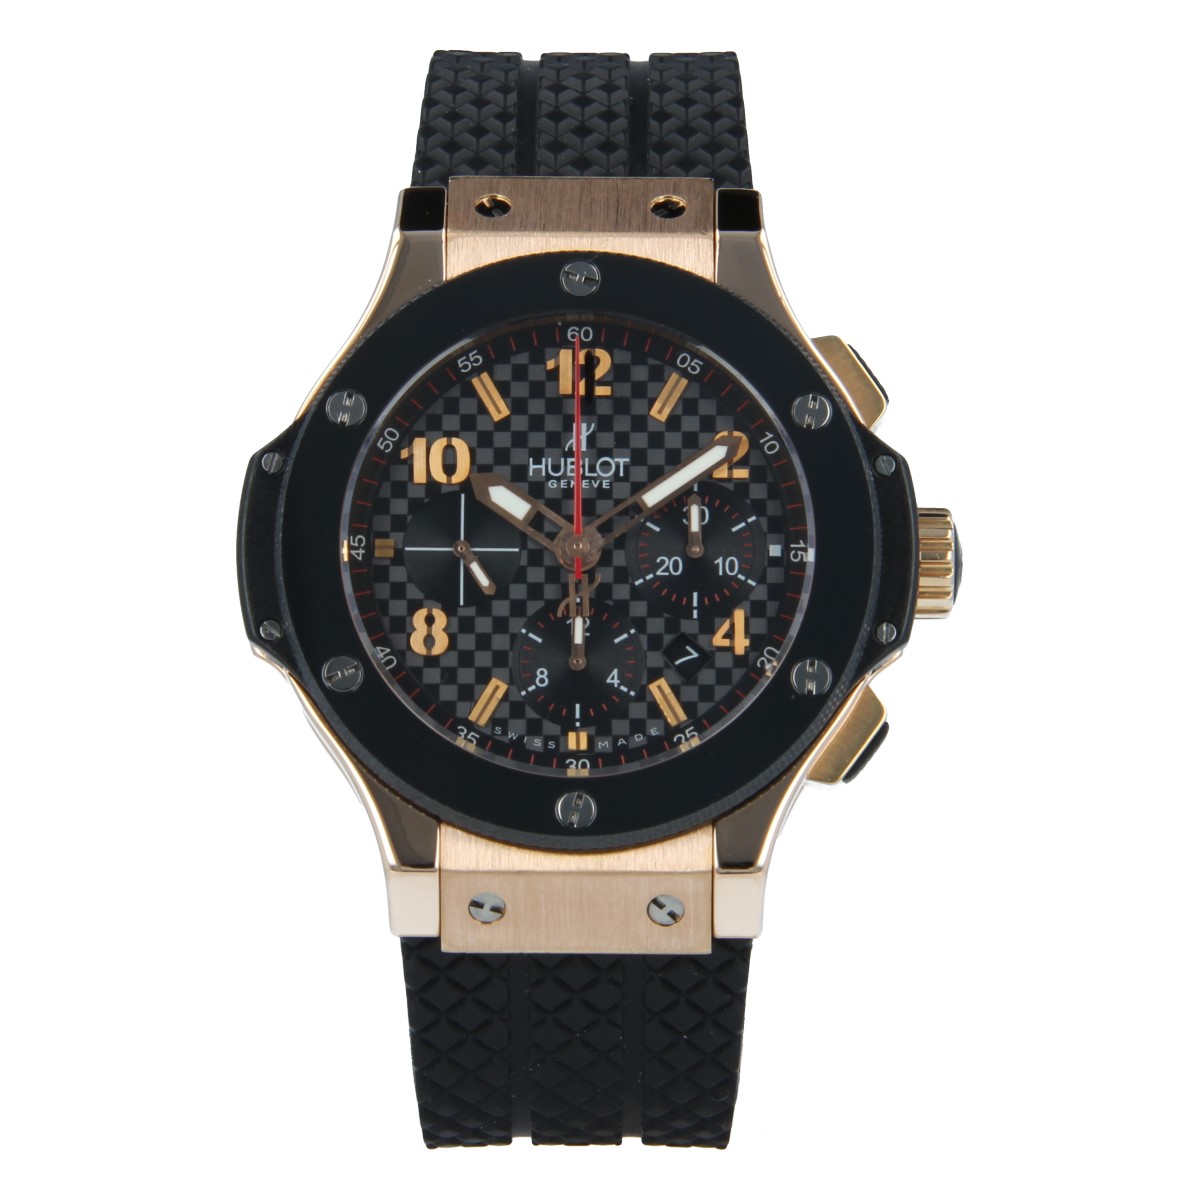 Hublot Big Bang Rose Gold 44mm | Buy pre-owned Hublot watch